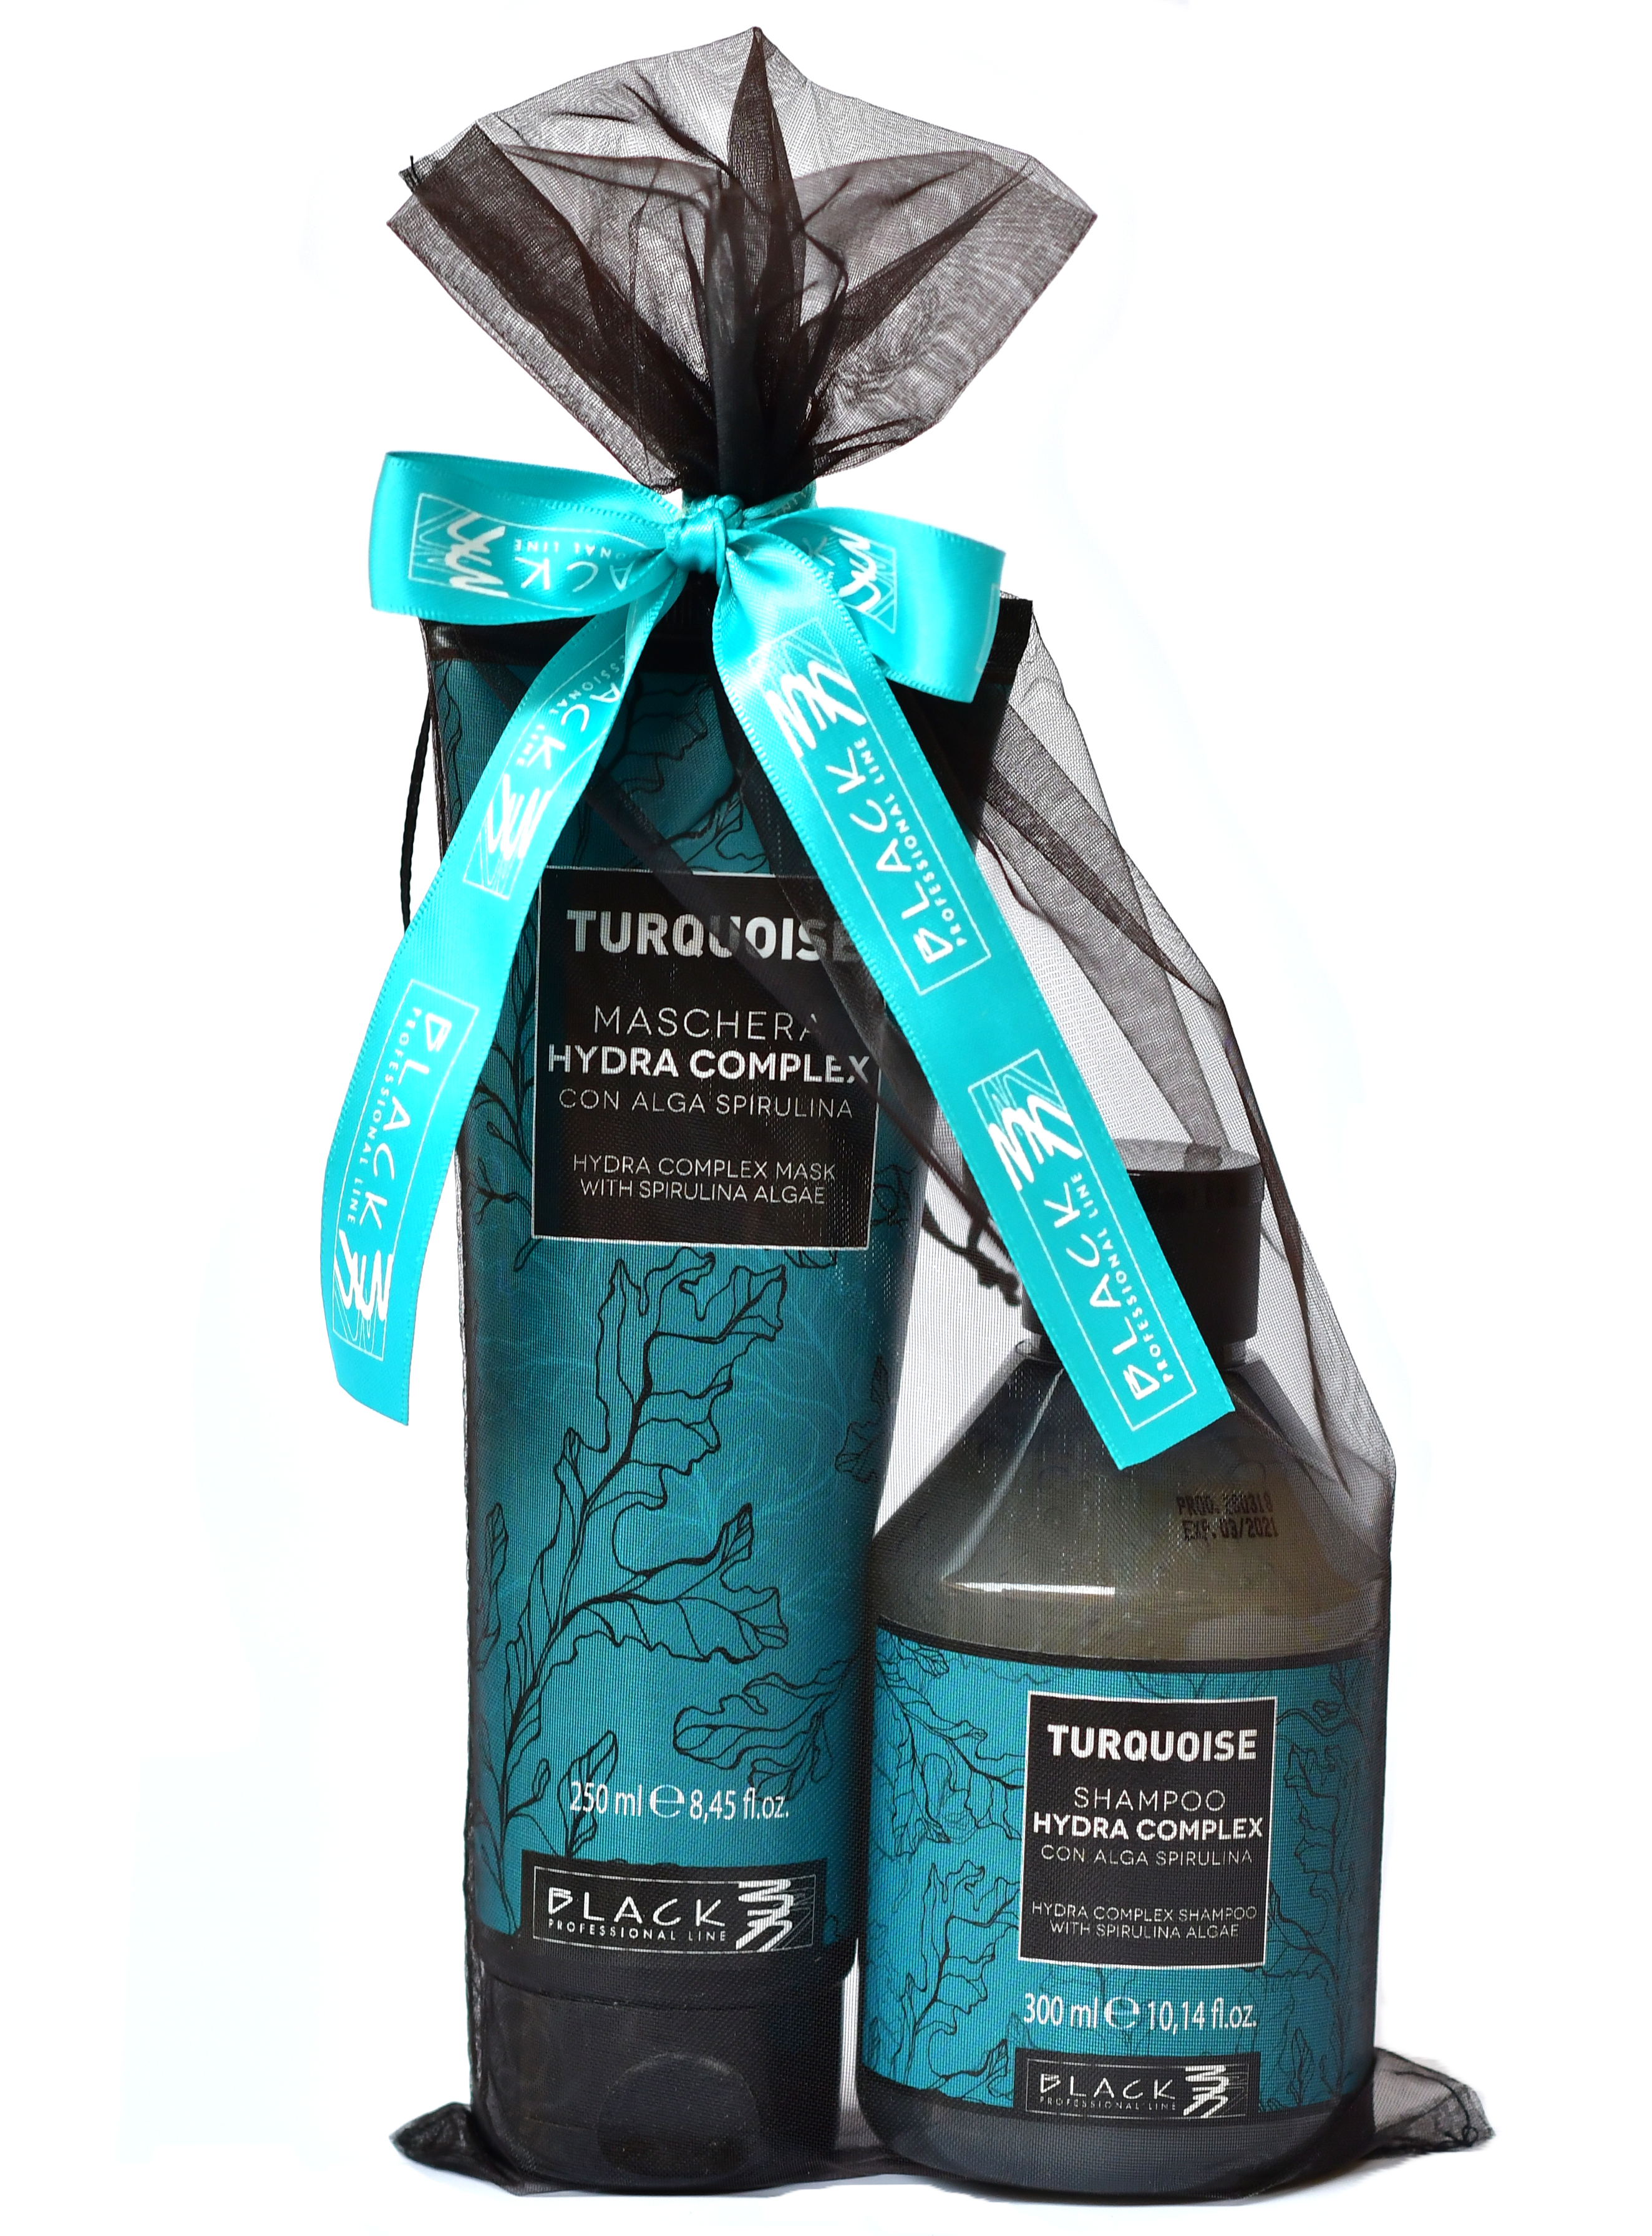 Dárková sada šamponu a masky pro jemné vlasy Black Turquoise Hydra Complex (102015B) + dárek zdarma